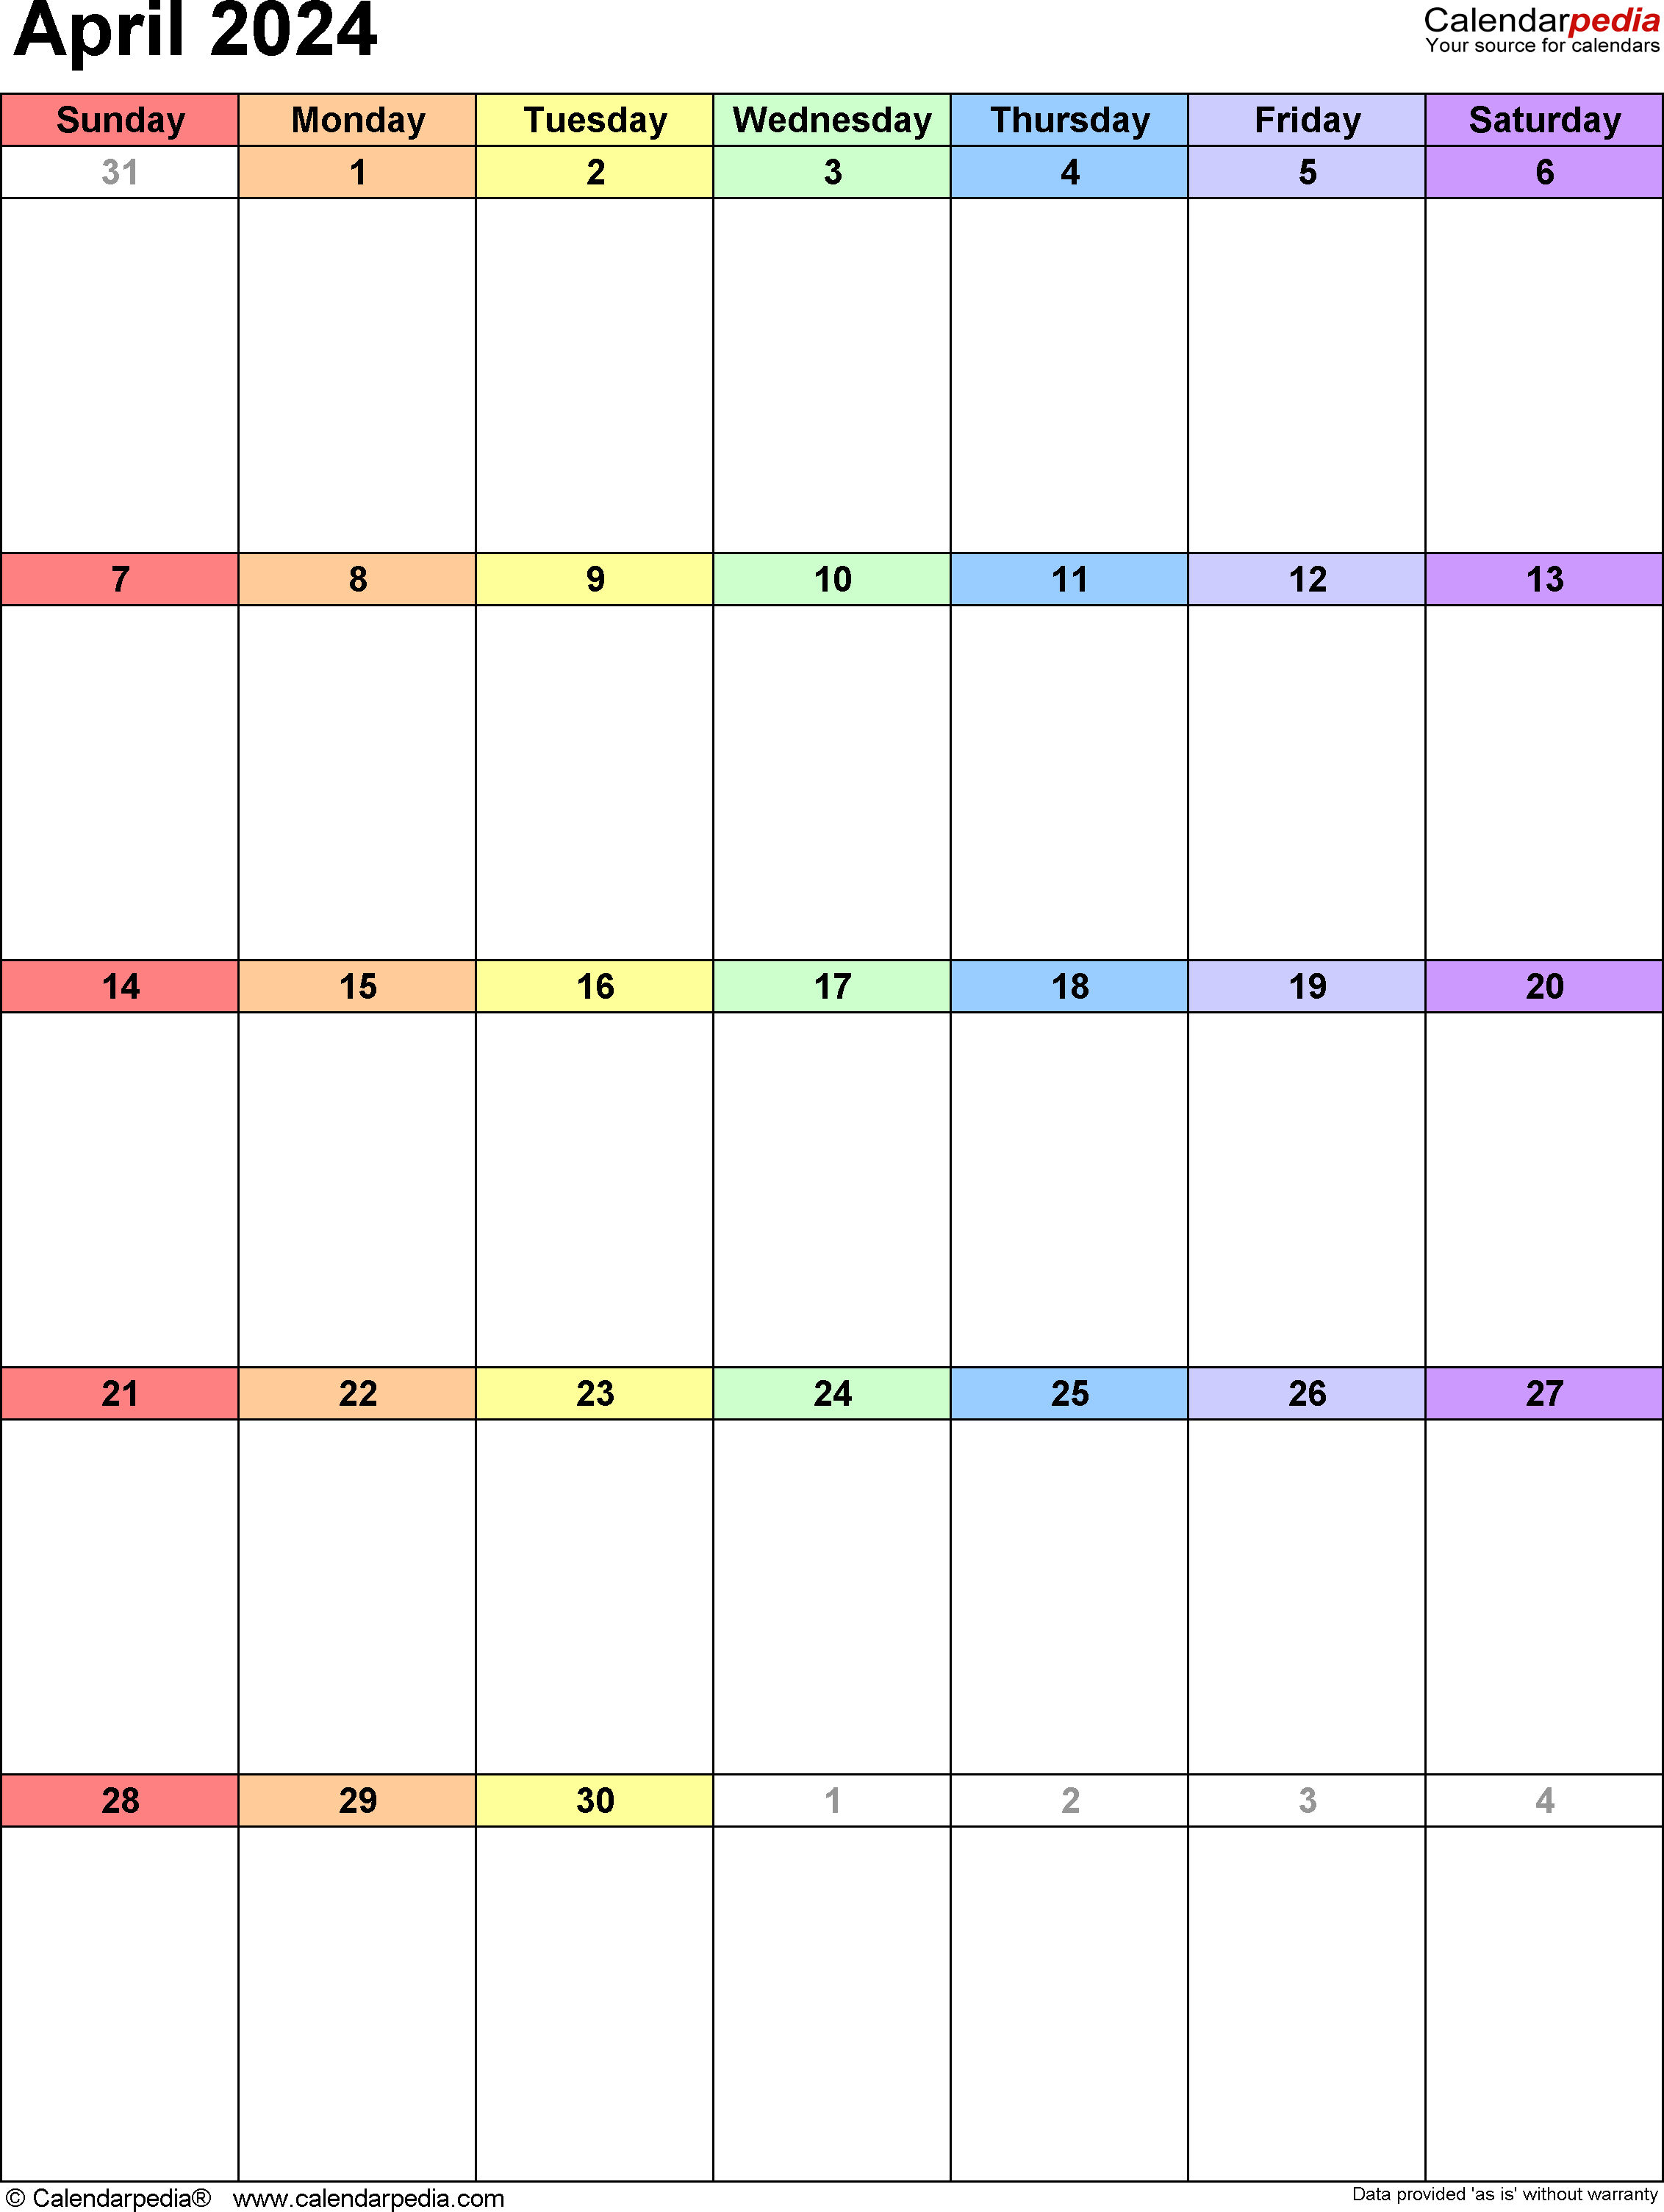 April 2024 Calendar | Templates For Word, Excel And Pdf in April 2024 Calendar Editable